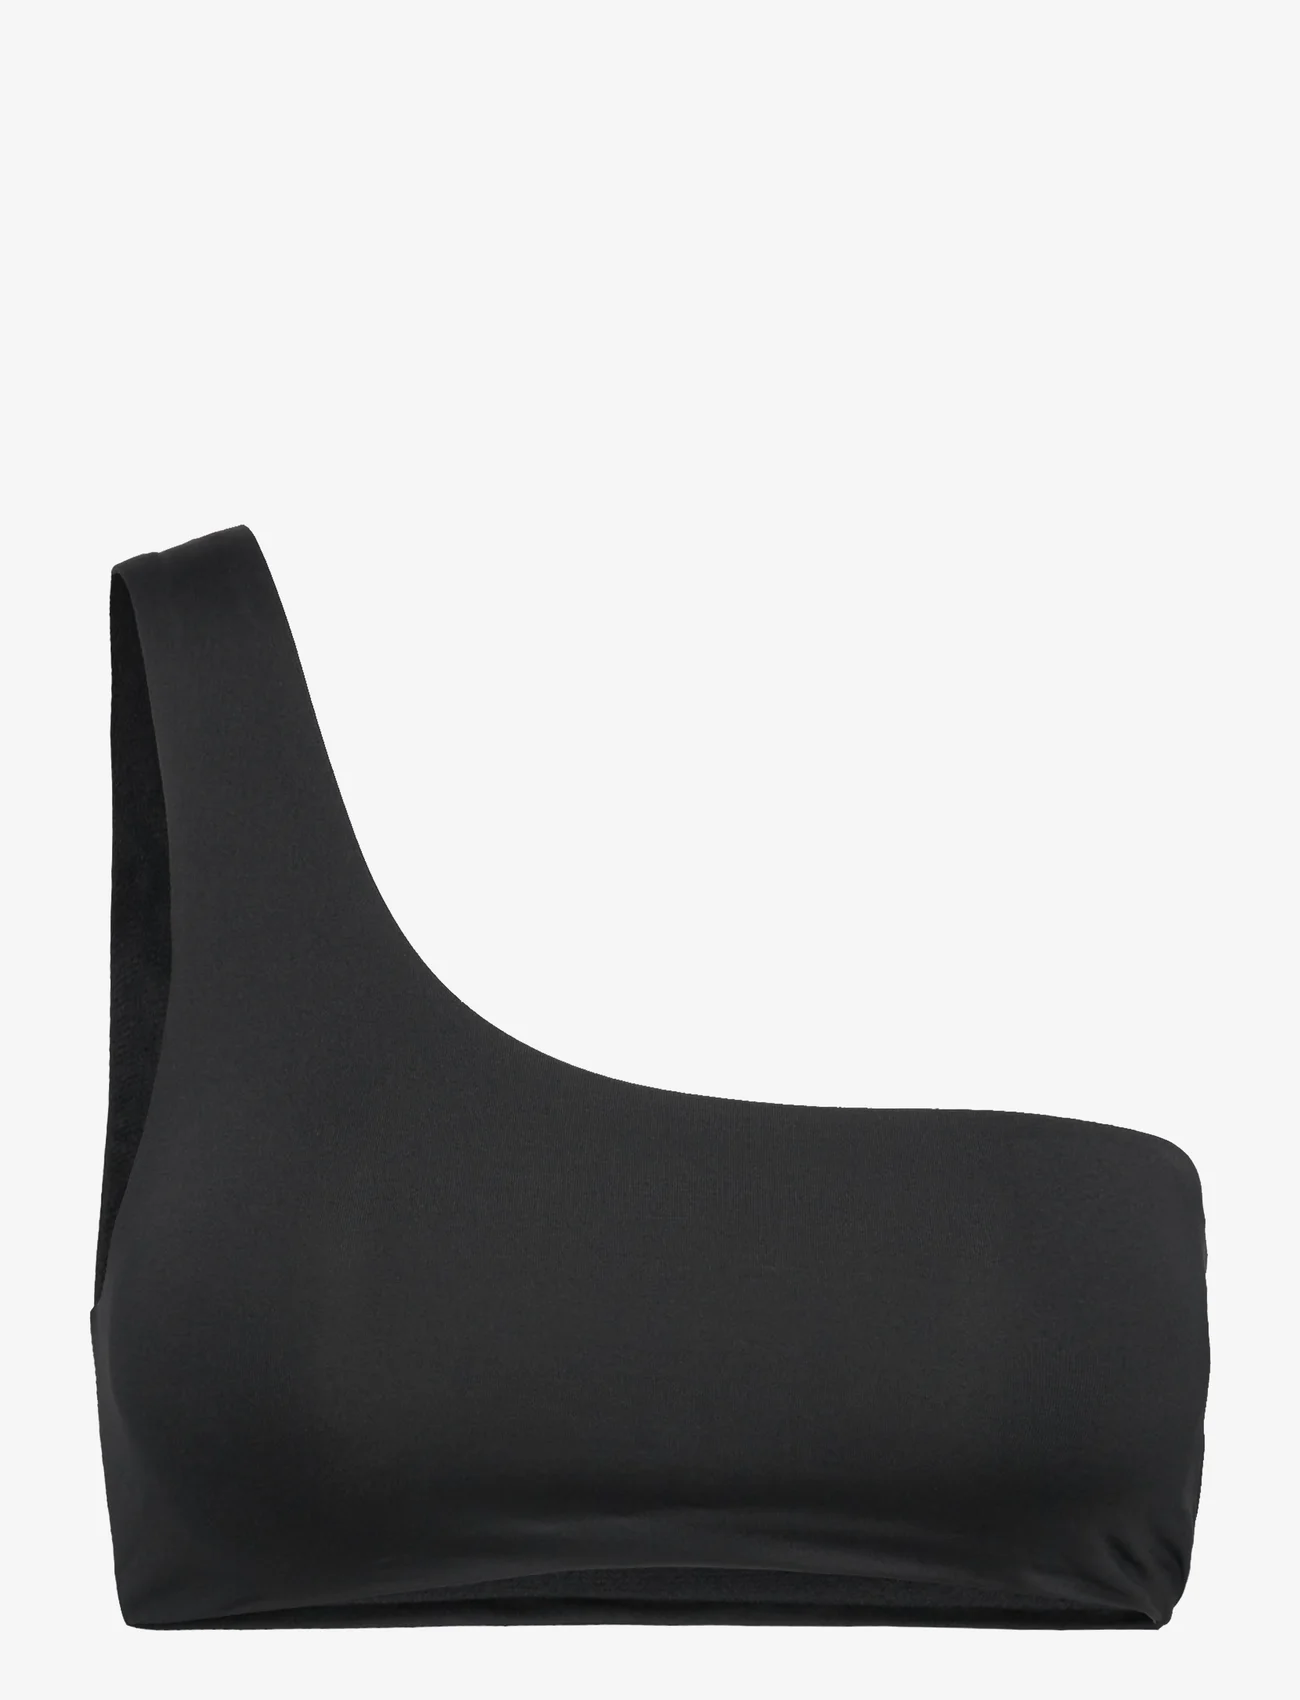 NIKE SWIM - Nike Essential Asymmetrical Bikini Top - bandeau-bikini-oberteile - black - 1